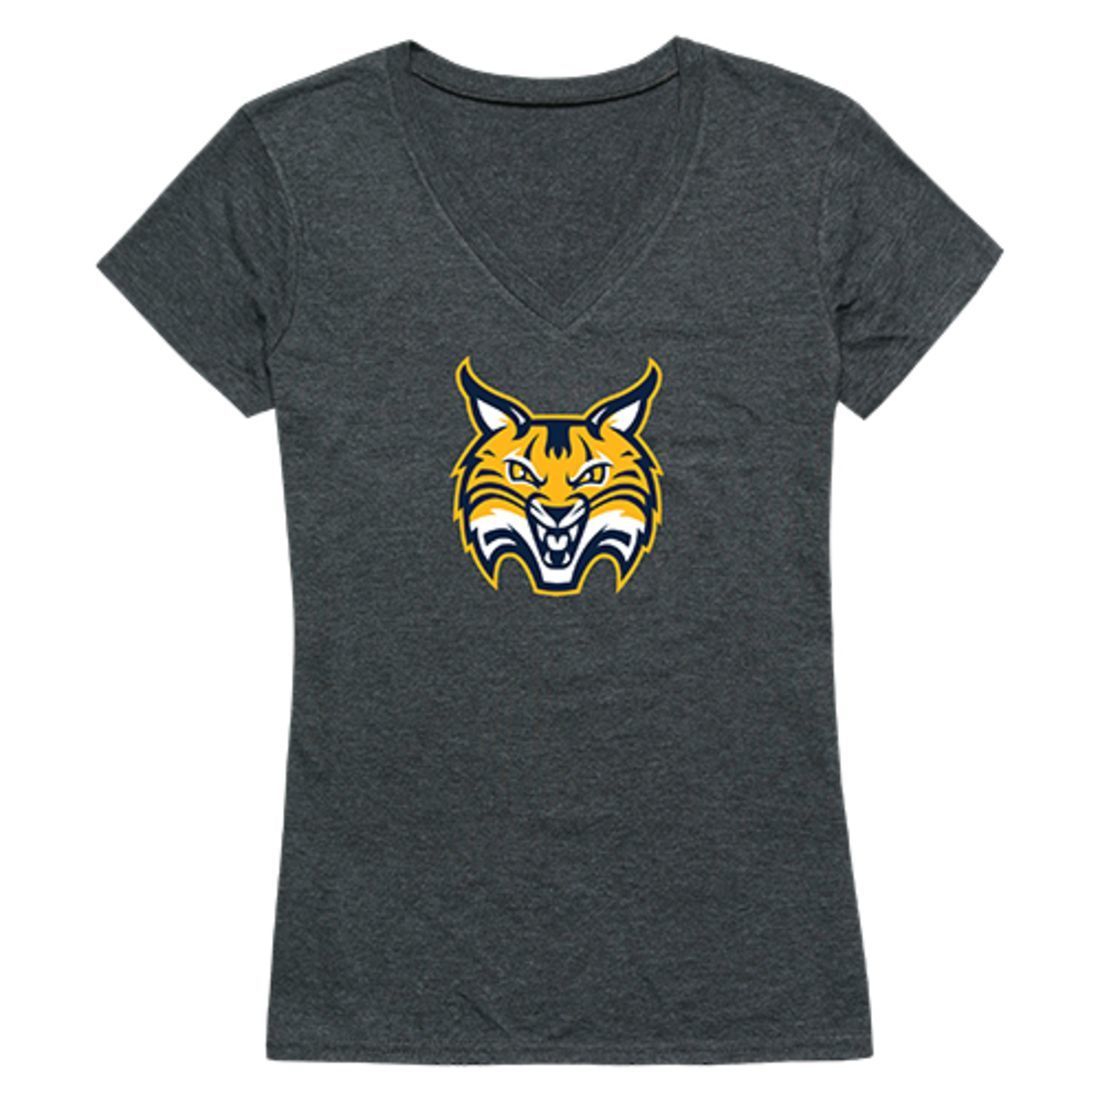 QU Quinnipiac University Bobcats Womens Cinder T-Shirt Heather Charcoal-Campus-Wardrobe